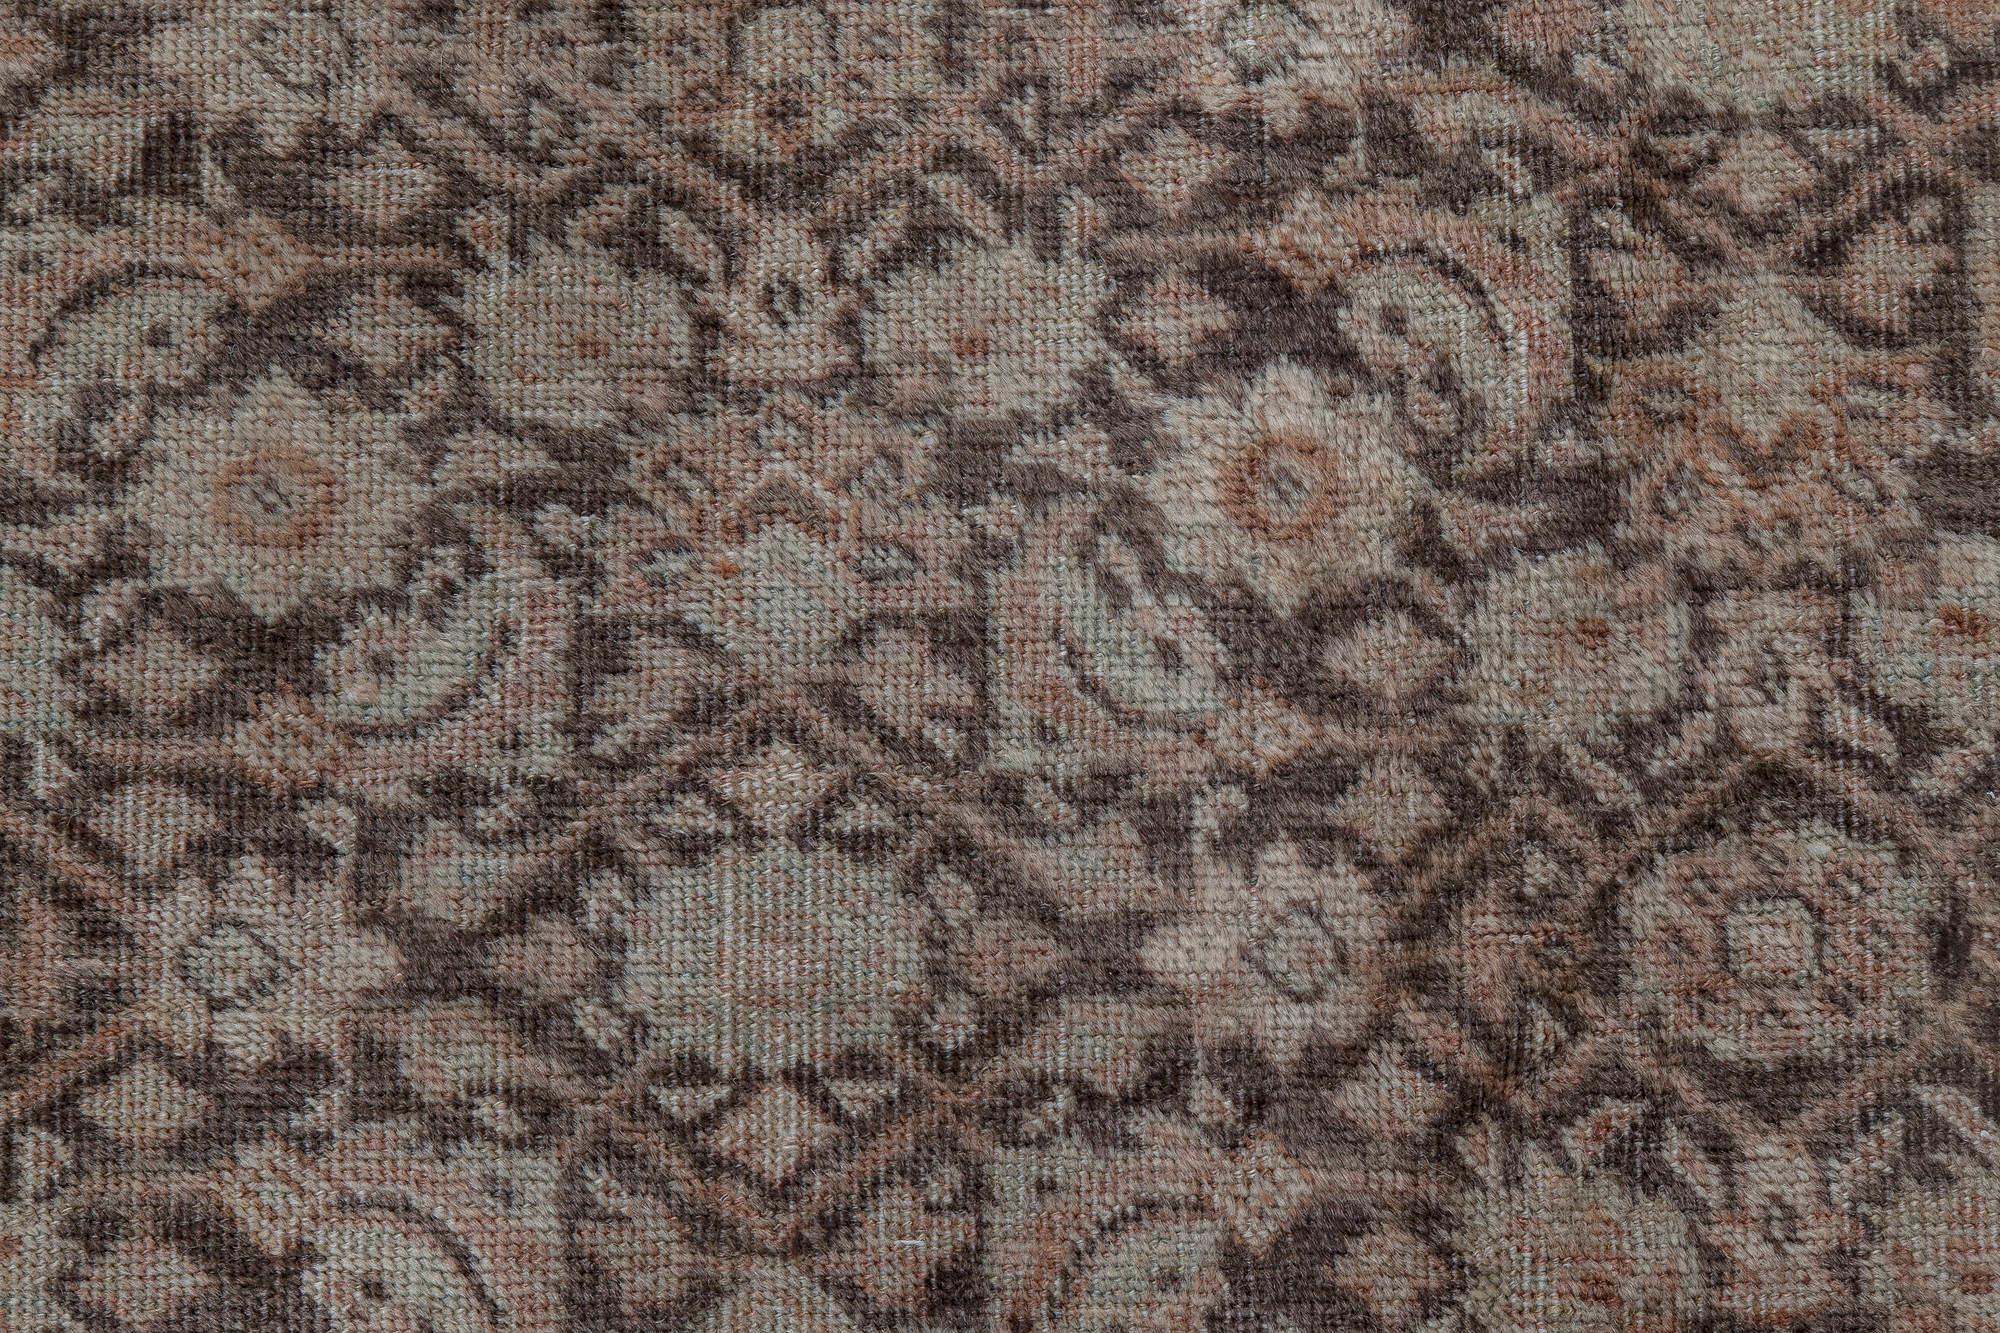 Authentic Late 19th century Persian Tabriz carpet
Size: 12'4